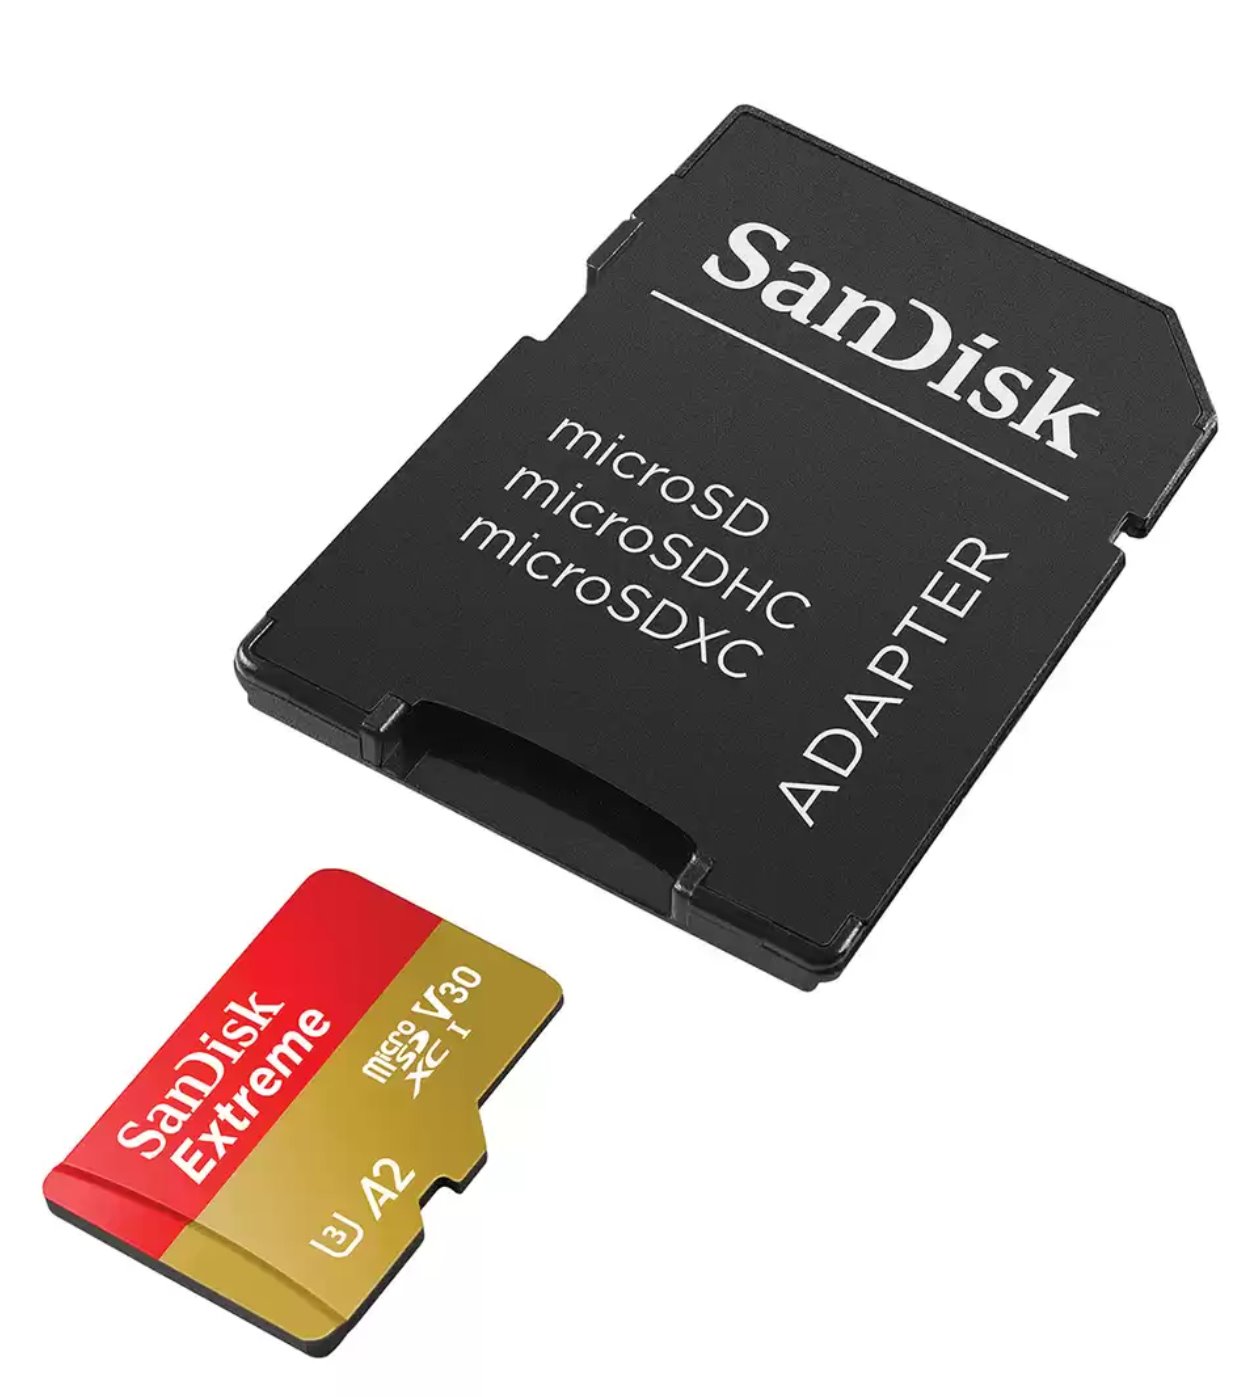 SanDisk Extreme 32GB microSD card